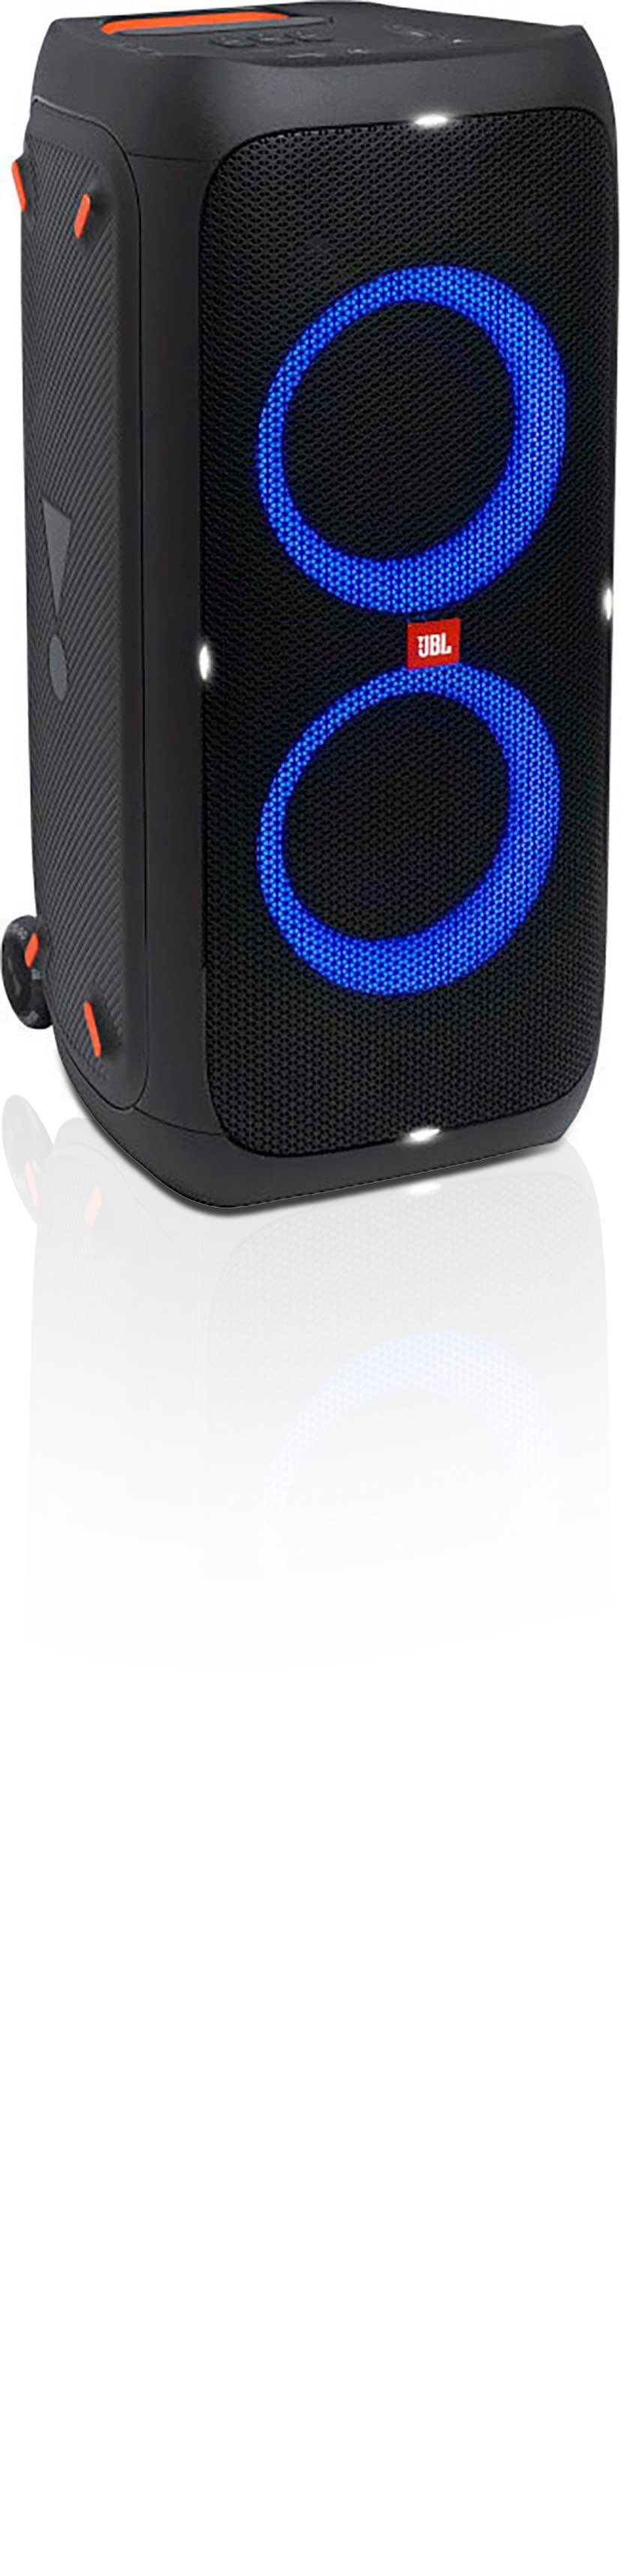 Akku, Party-Lautsprecher Party W, rollbar, tolle 240 Box Lichteffekte, 310 USB) (Bluetooth, JBL